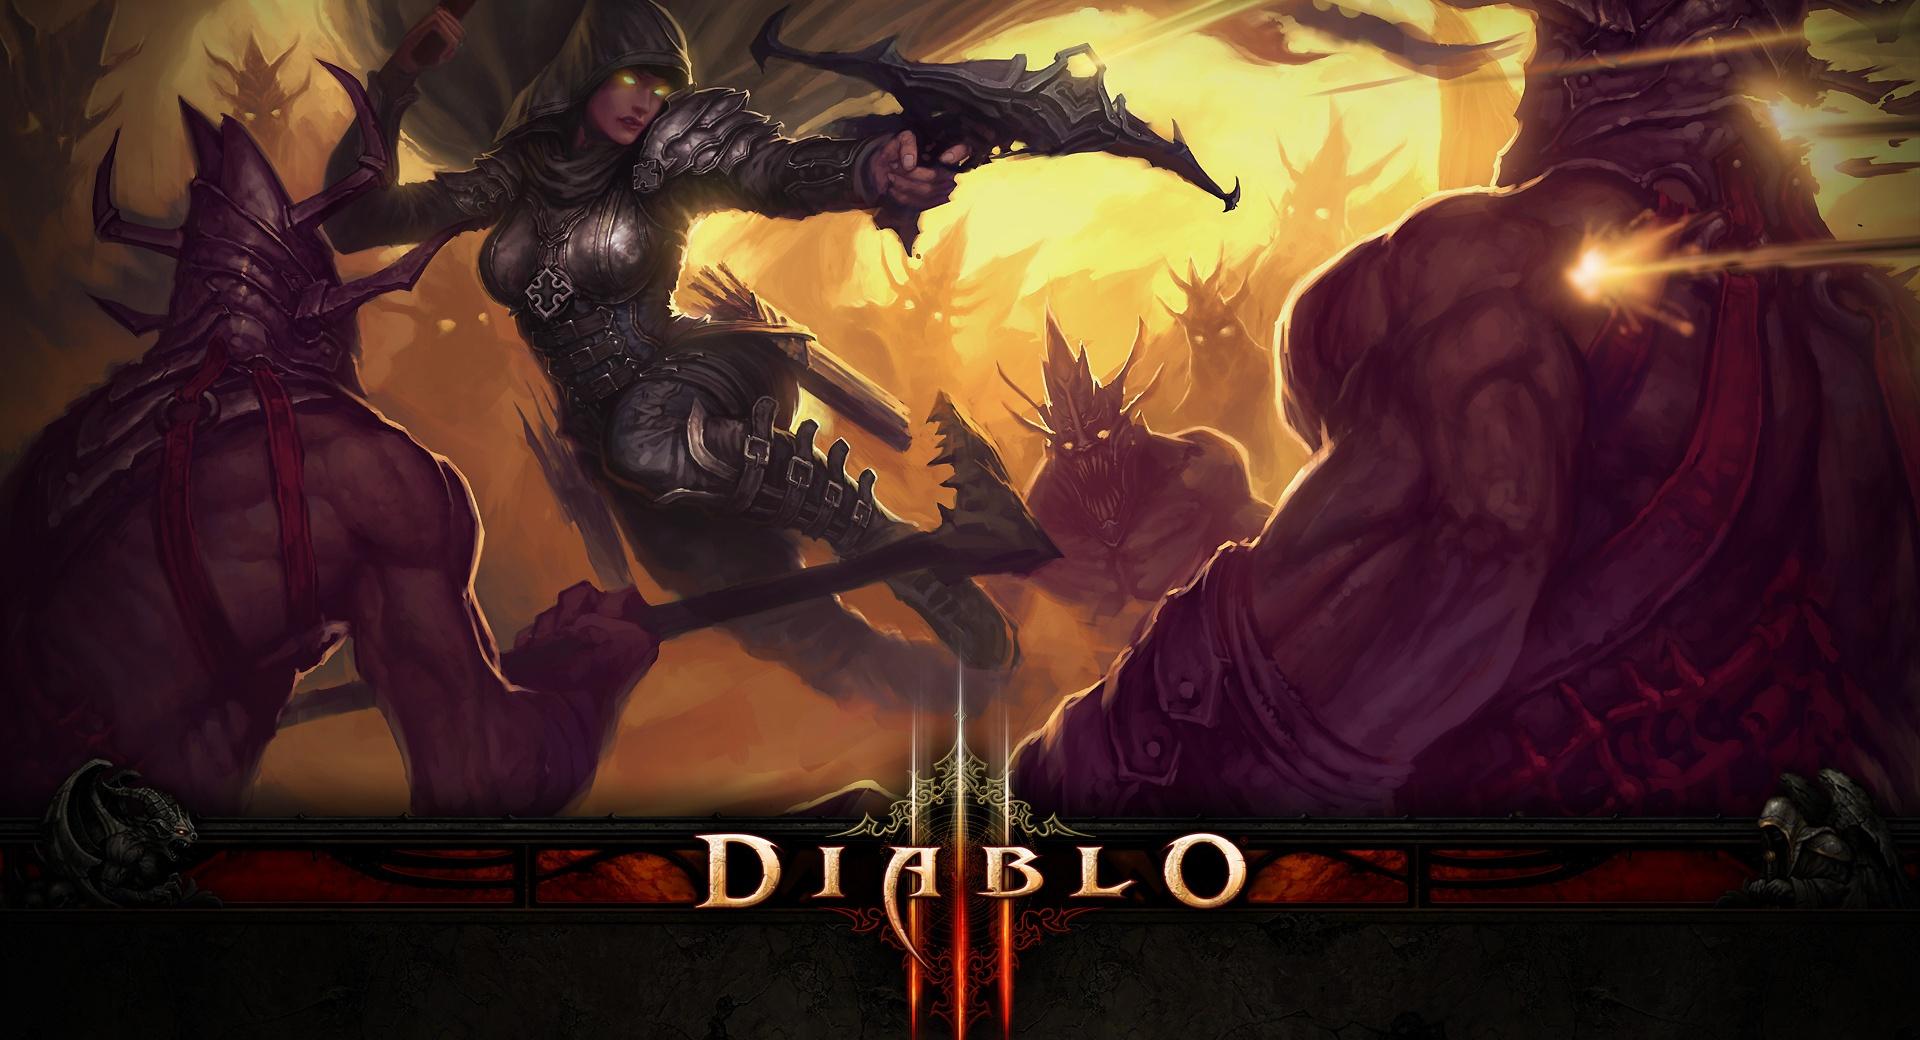 Diablo III Demon Hunter at 1280 x 960 size wallpapers HD quality